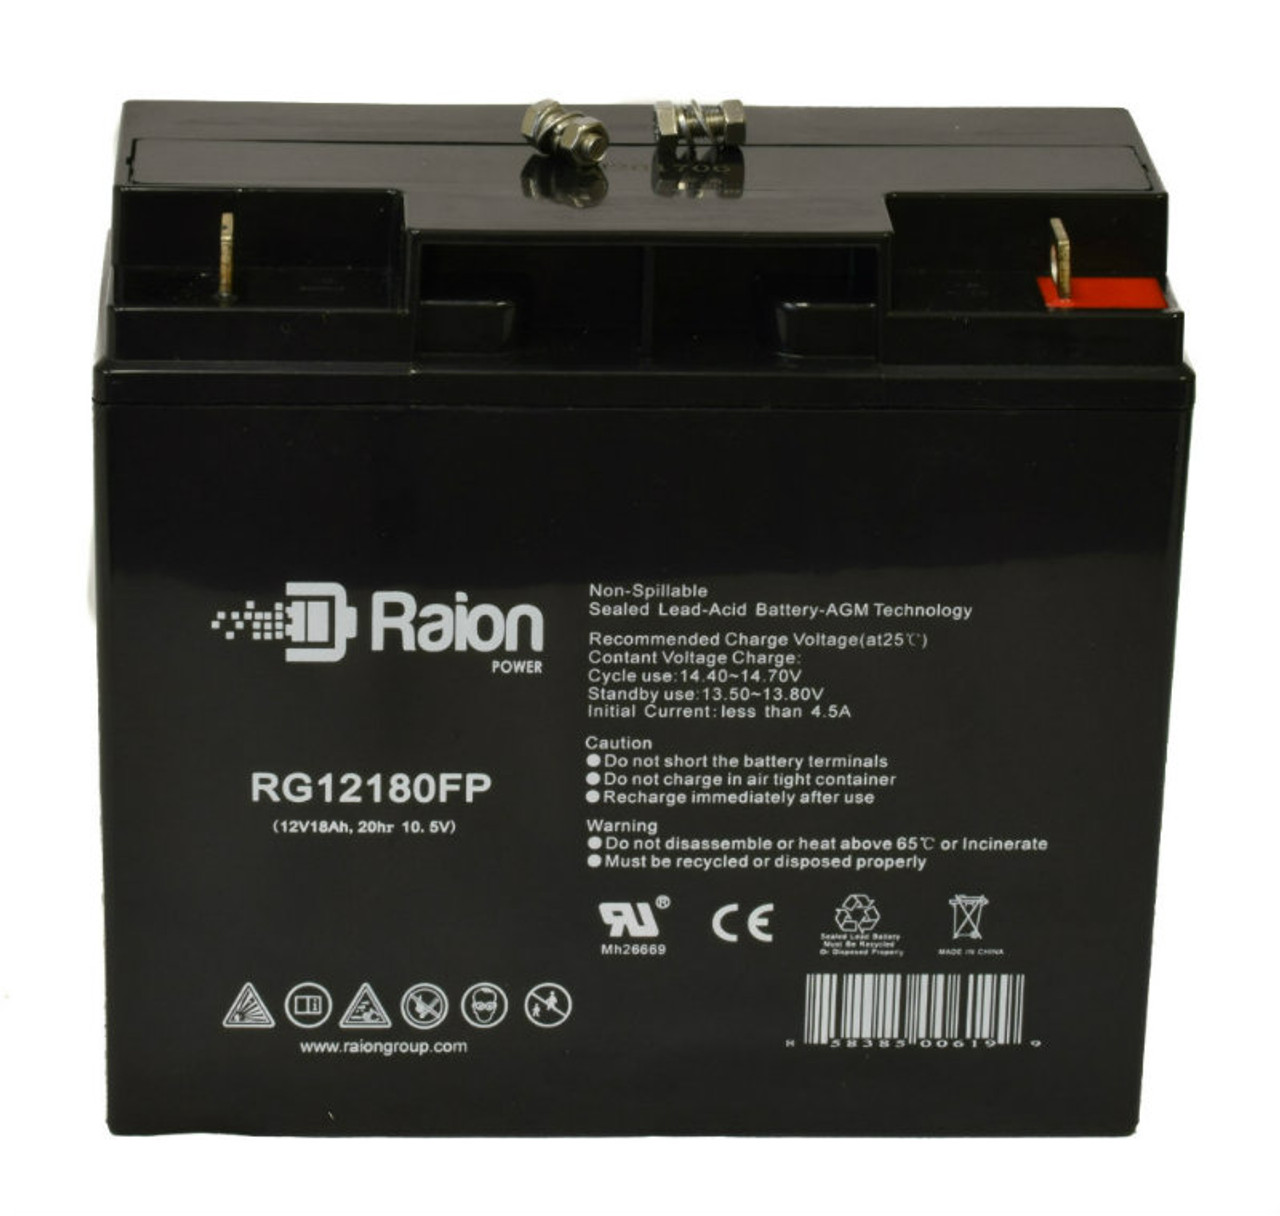 Raion Power RG12180FP 12V 18Ah Lead Acid Battery for NERBO NBL 18-12